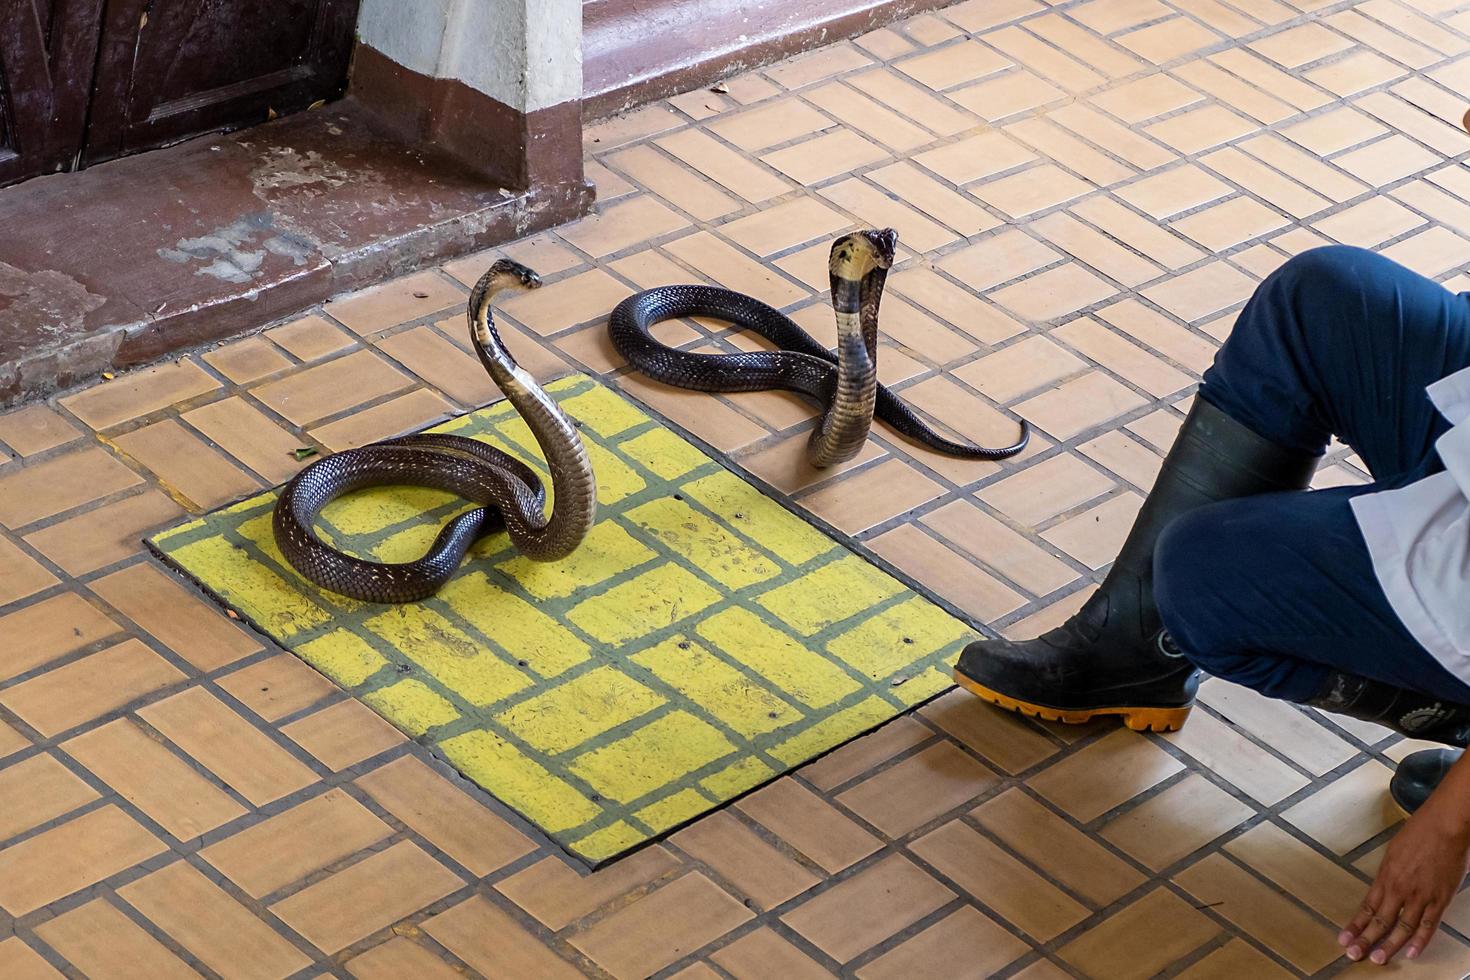 Démonstration de manipulation de serpents combats avec deux cobras, Bangkok, Thaïlande photo